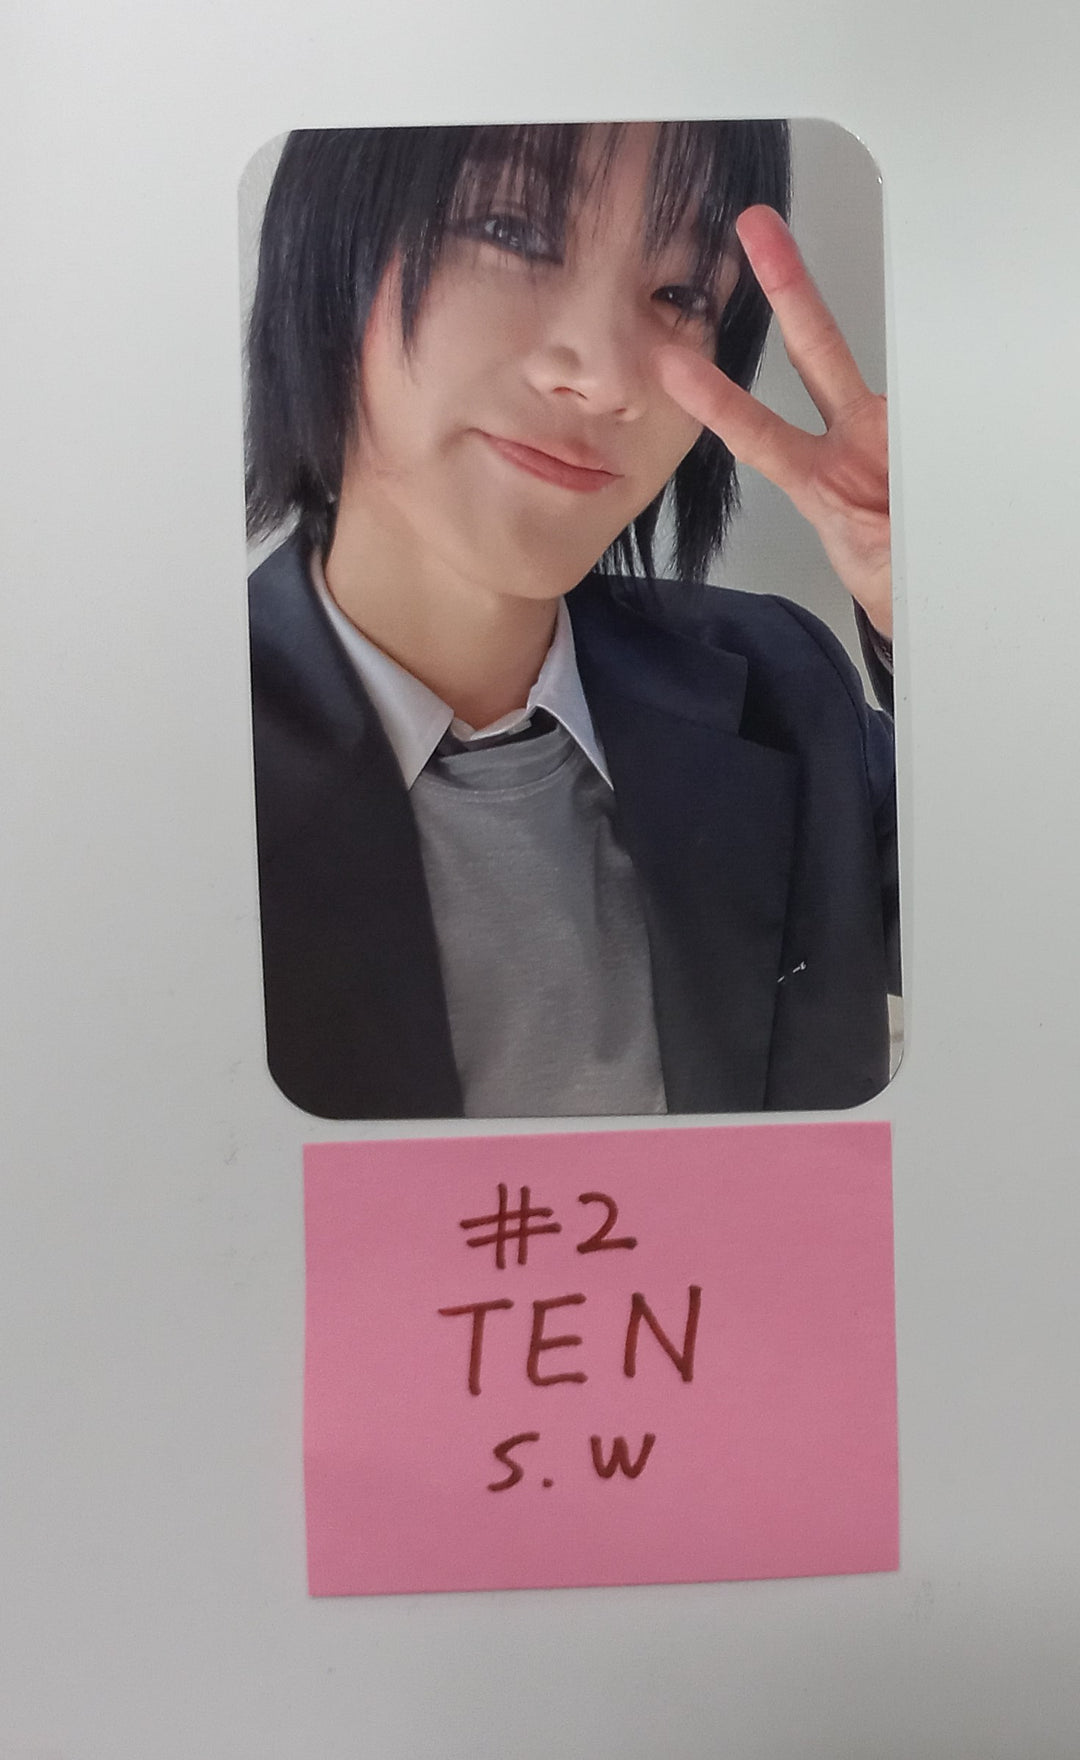 TEN 1st Mini "TEN" - サウンドウェーブ予約特典フォトカード [24.02.21]